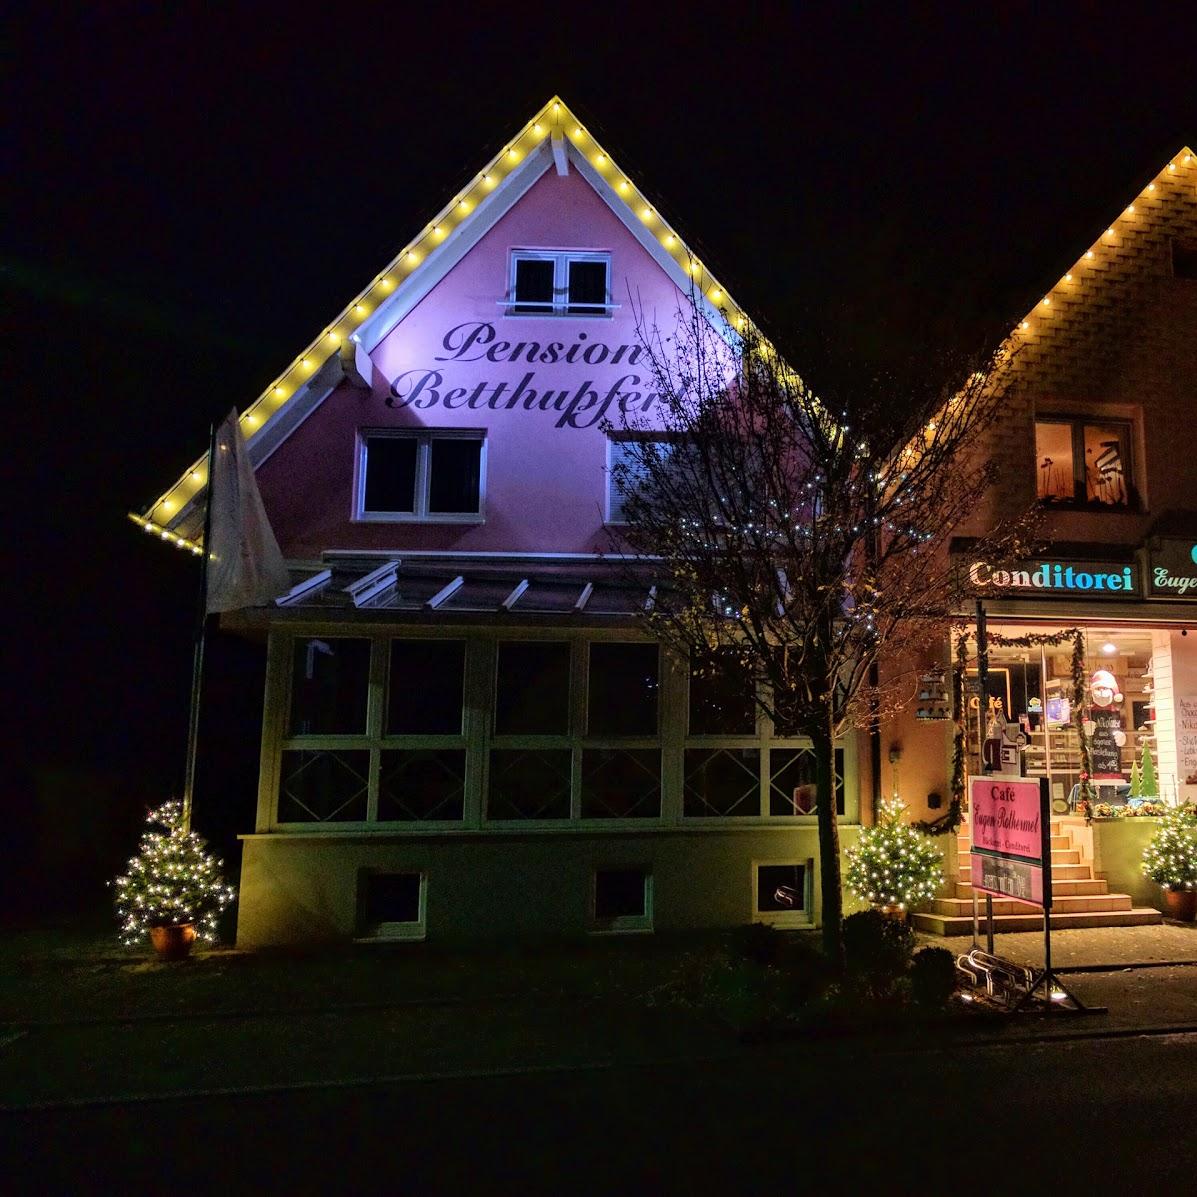 Restaurant "Pension Betthupferl" in Hambrücken